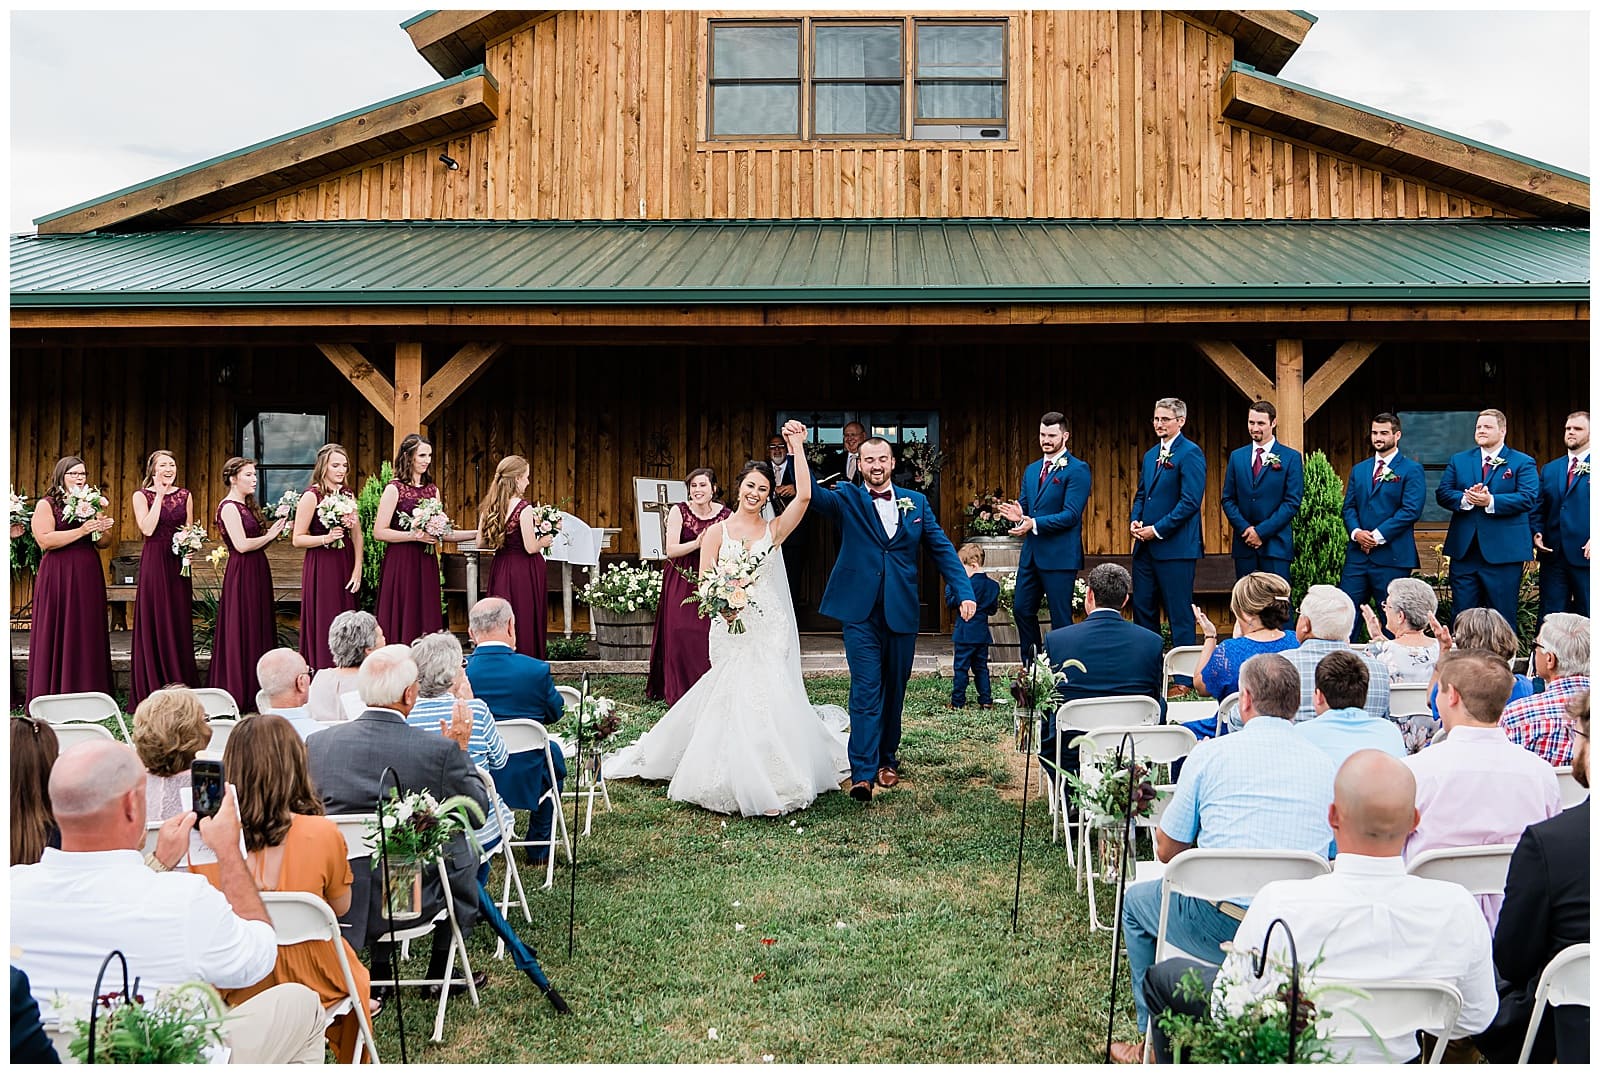 Danielle-Defayette-Photography-Middle-Fork-Barn-Wedding-VA-2020_0029.jpg